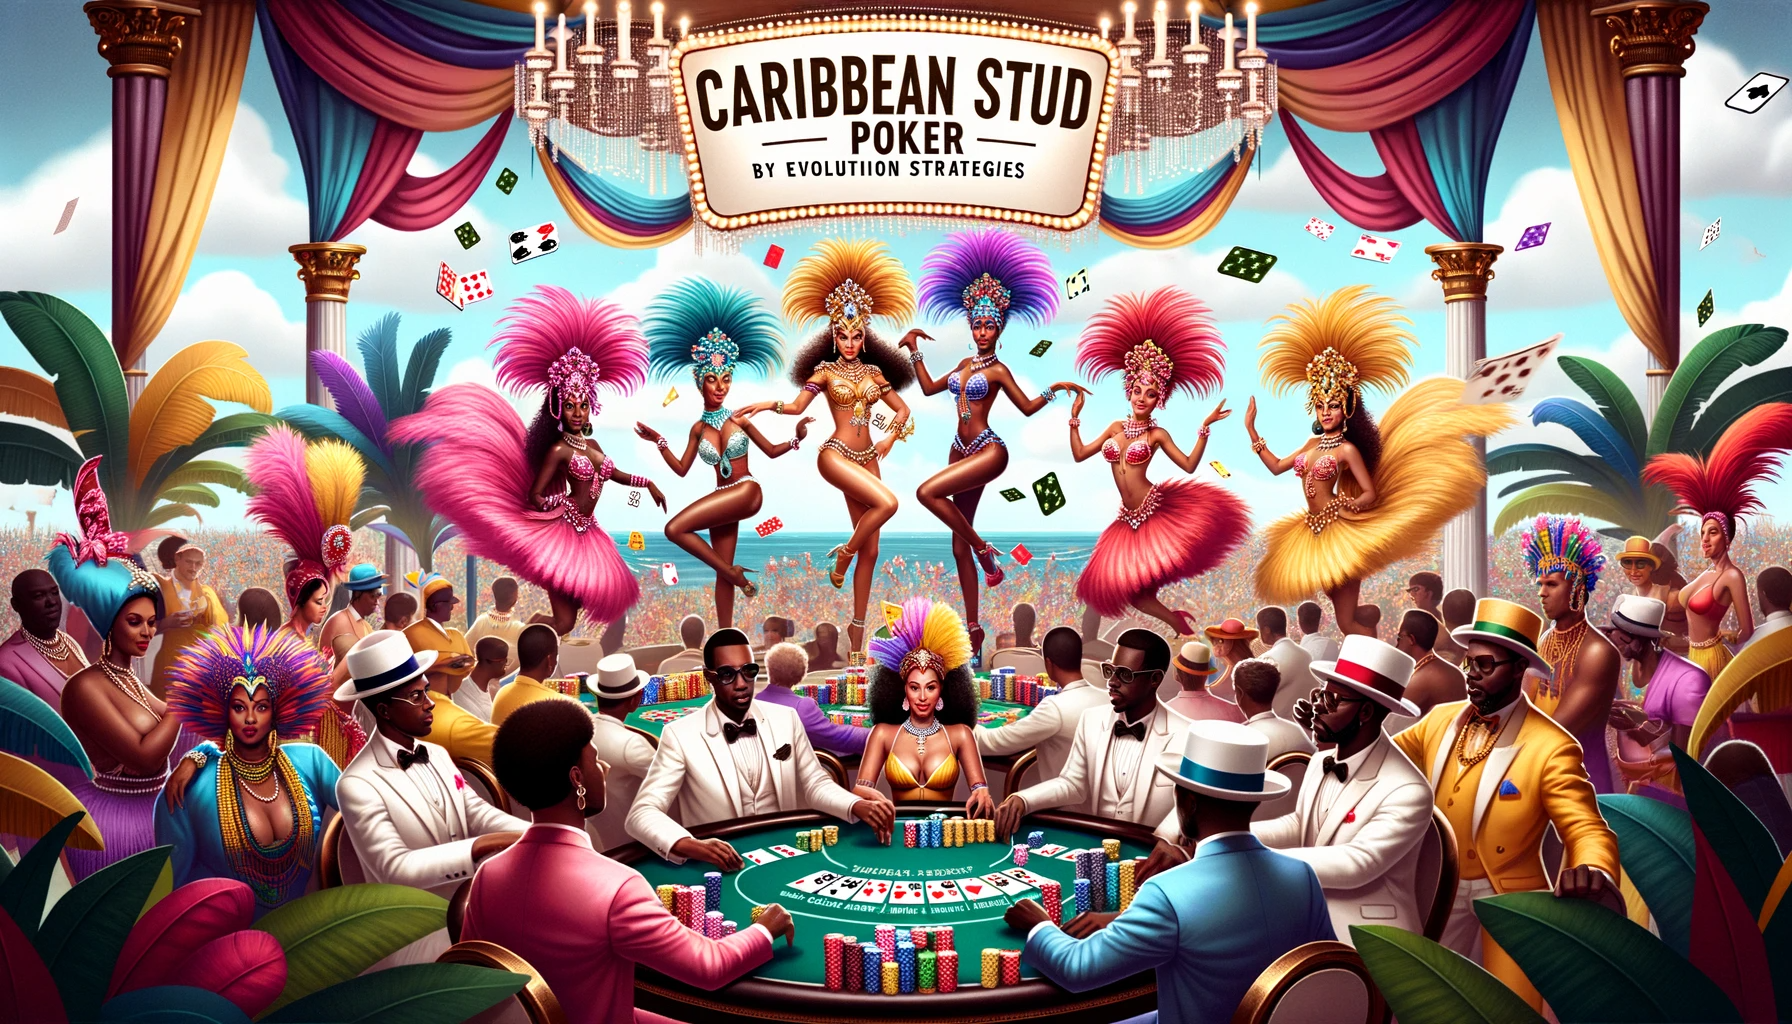 Caribbean stud poker by evolution